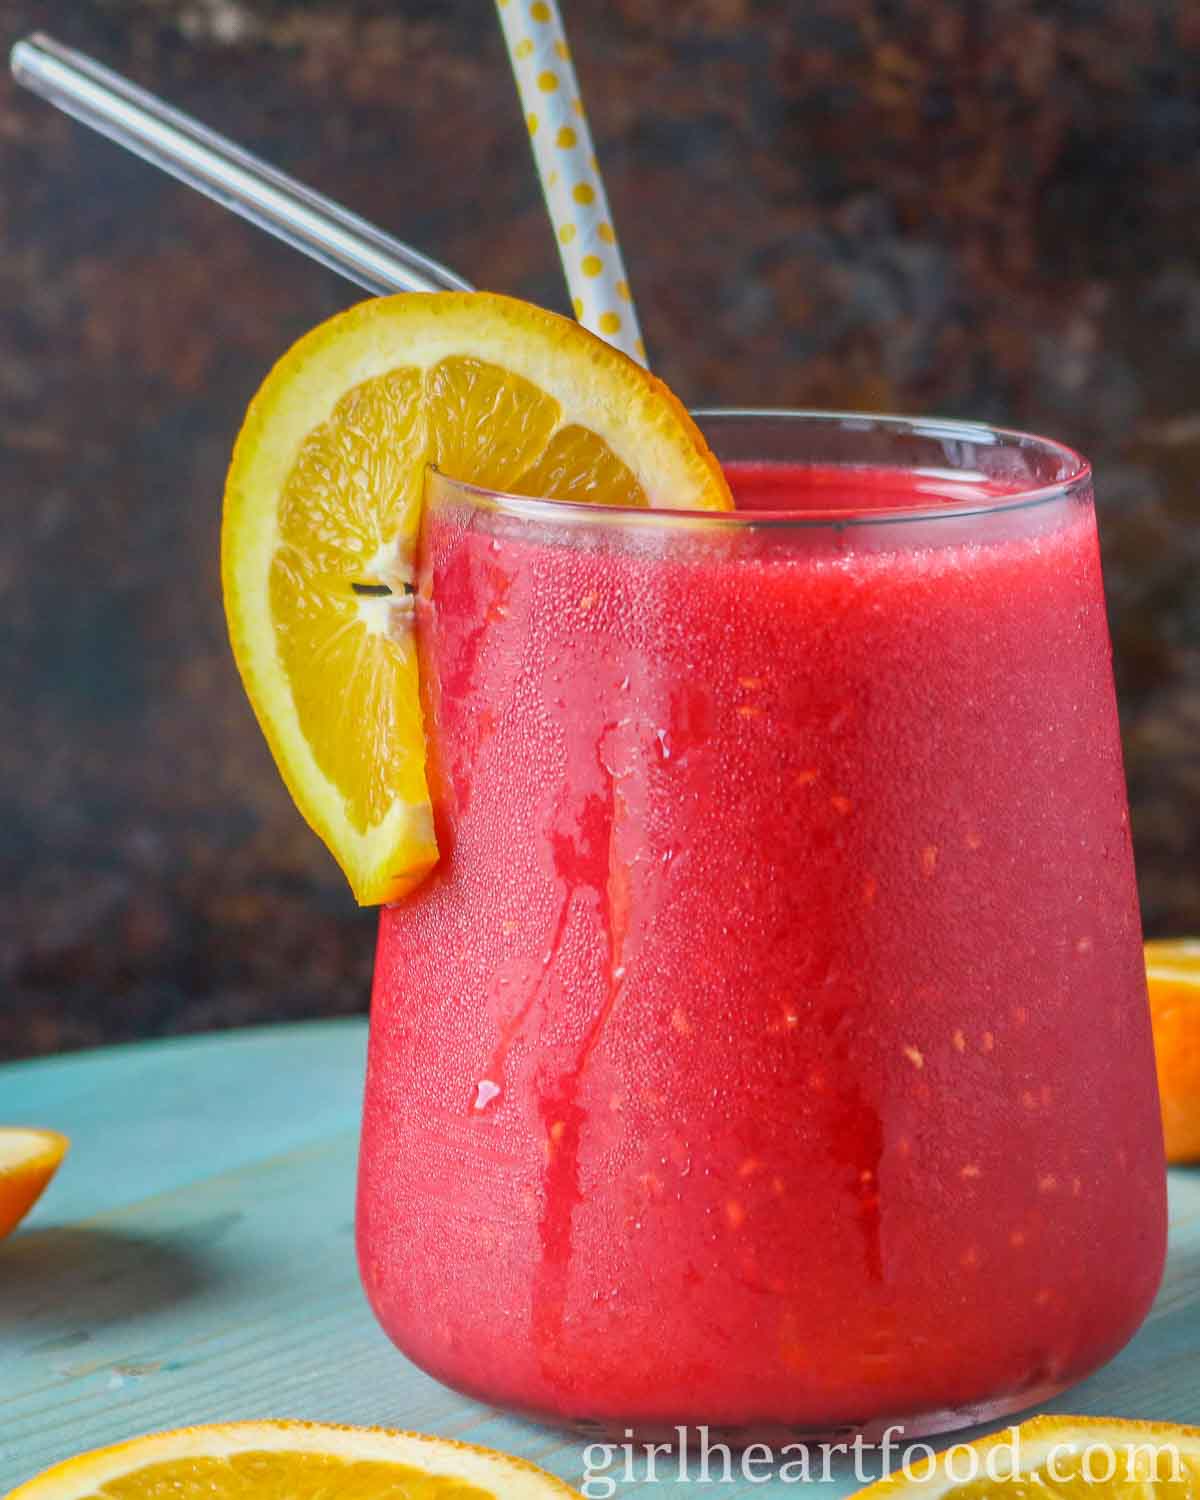 Glass of raspberry vodka slushy garnished with an orange slice.